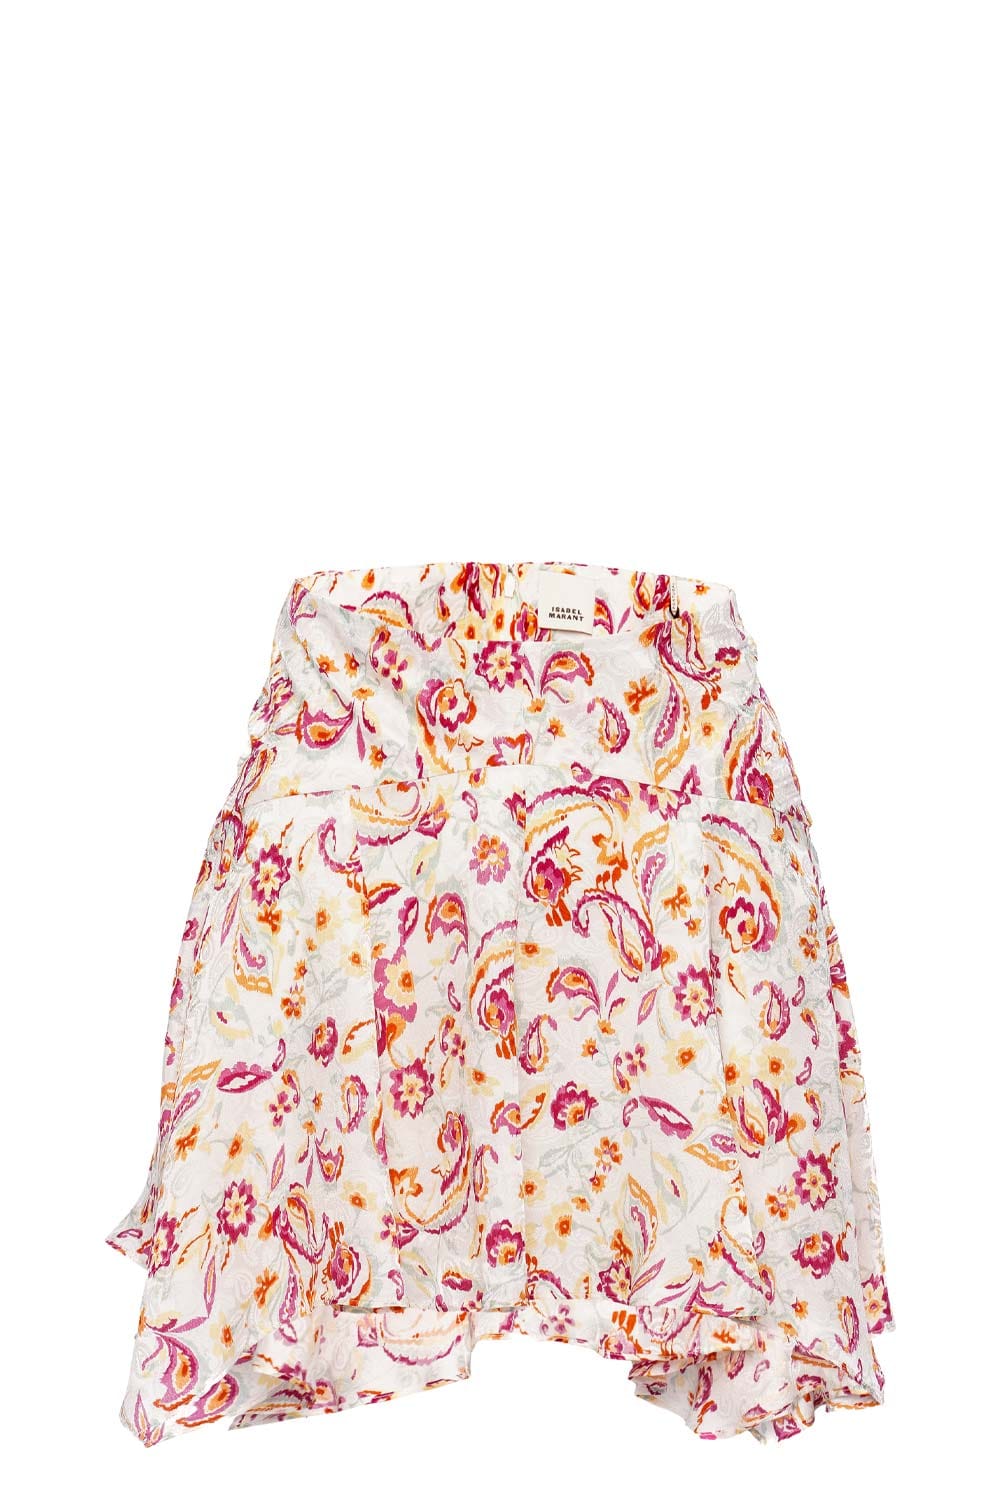 Isabel Marant Perrine Floral Ruffled Mini Skirt